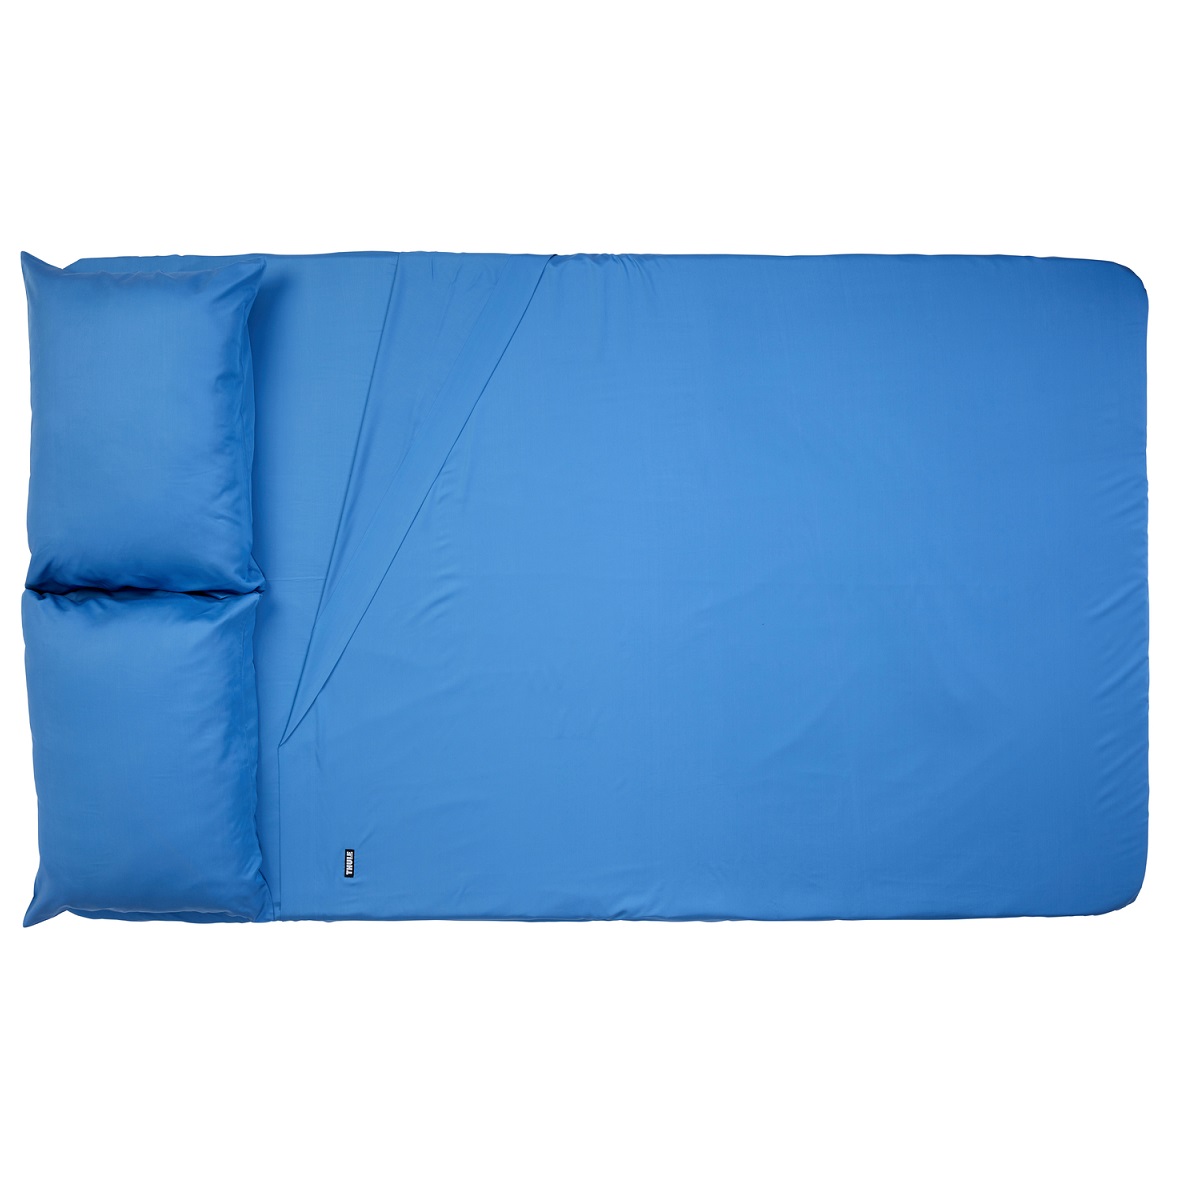 Thule Tepui Foothill posteljina plave boje